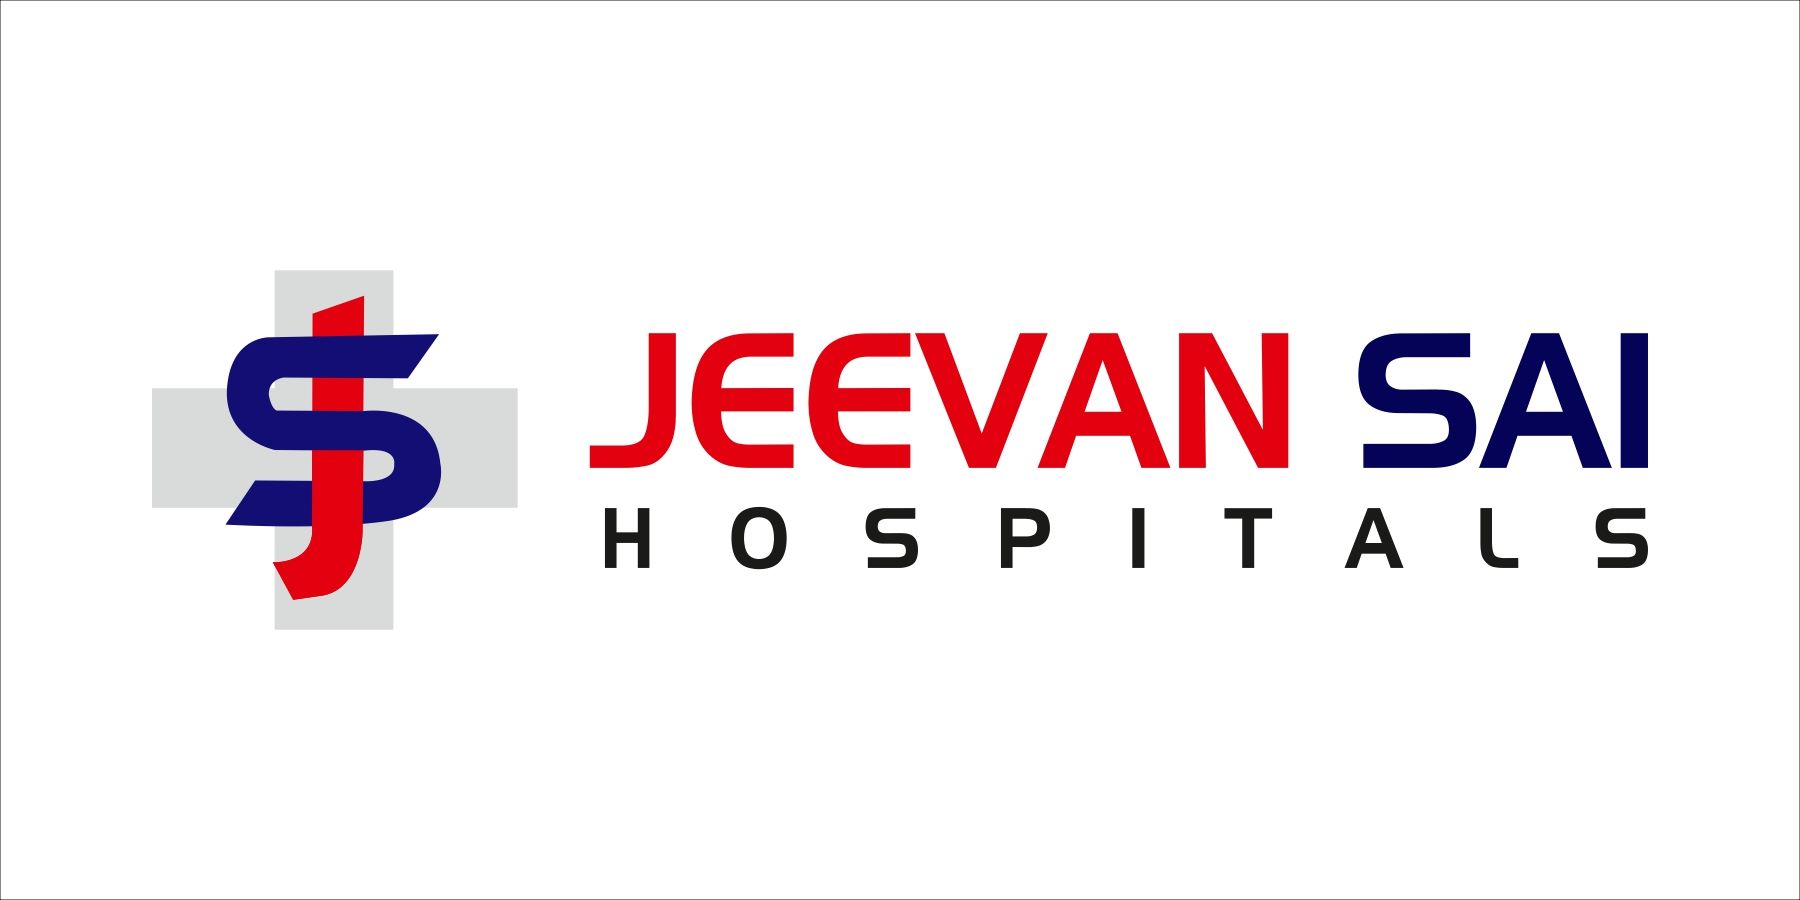 Jeevan Sai Hospitals